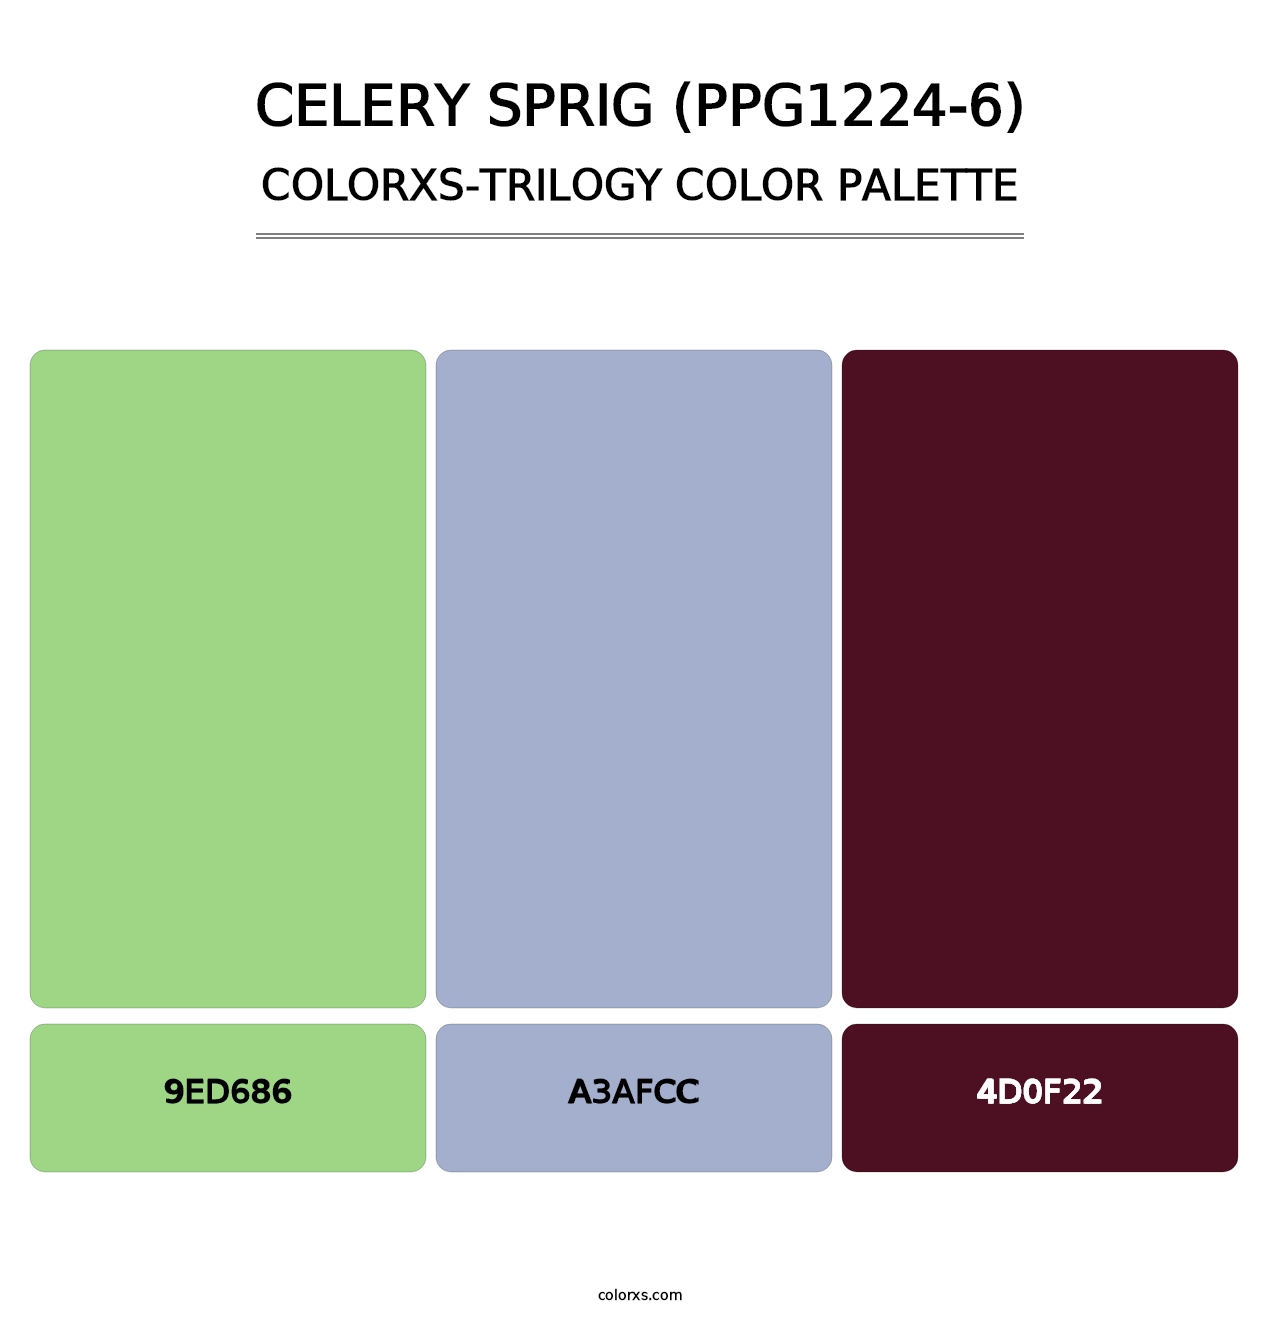 Celery Sprig (PPG1224-6) - Colorxs Trilogy Palette